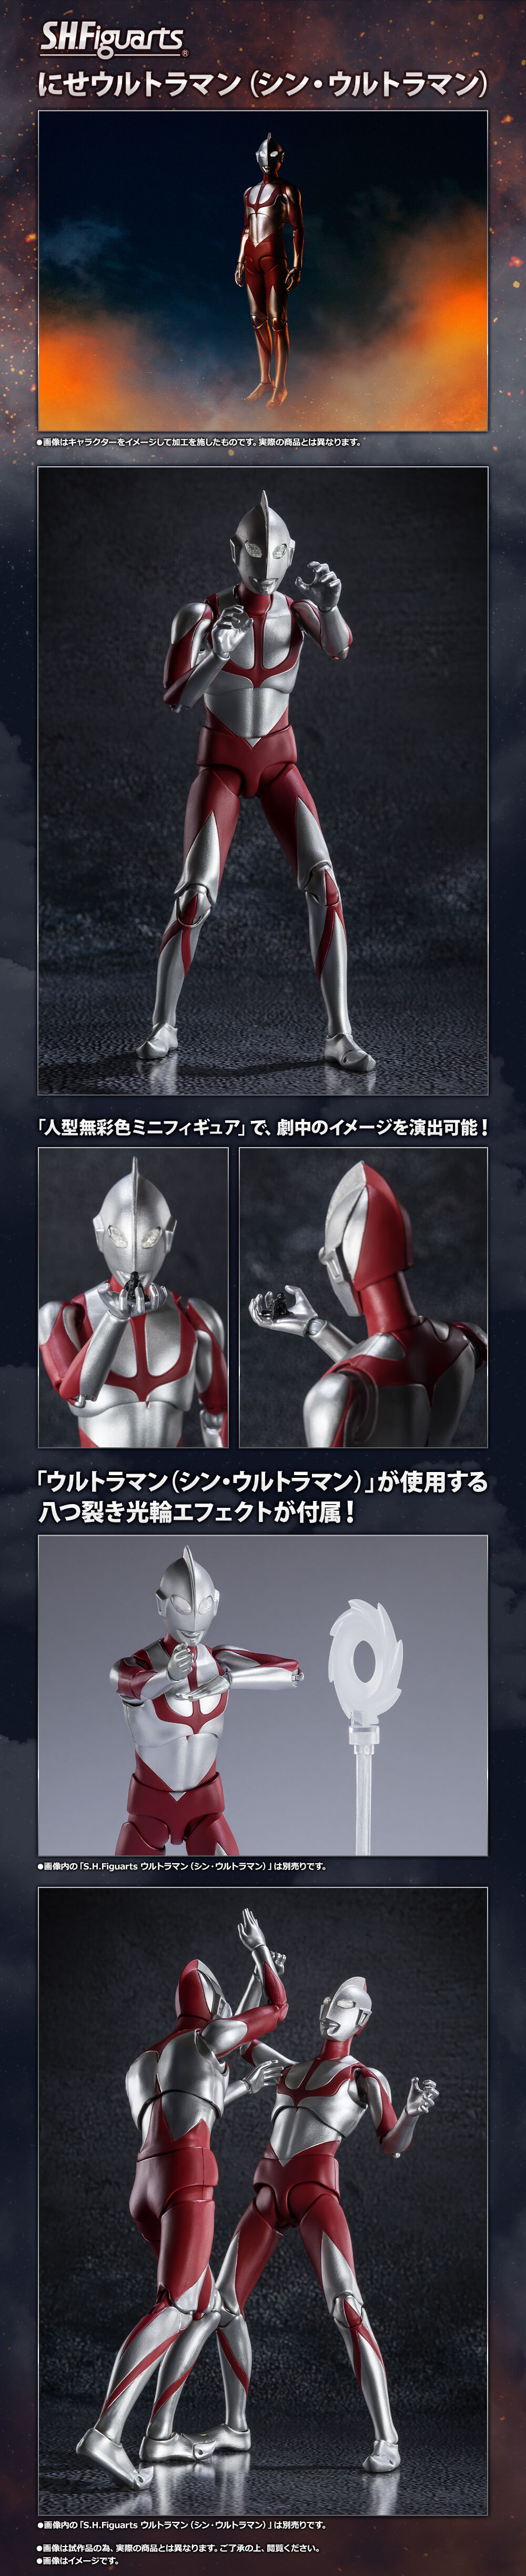 S.H.Figuarts IMIT-Ultraman (Shin Ultraman) Action Figure